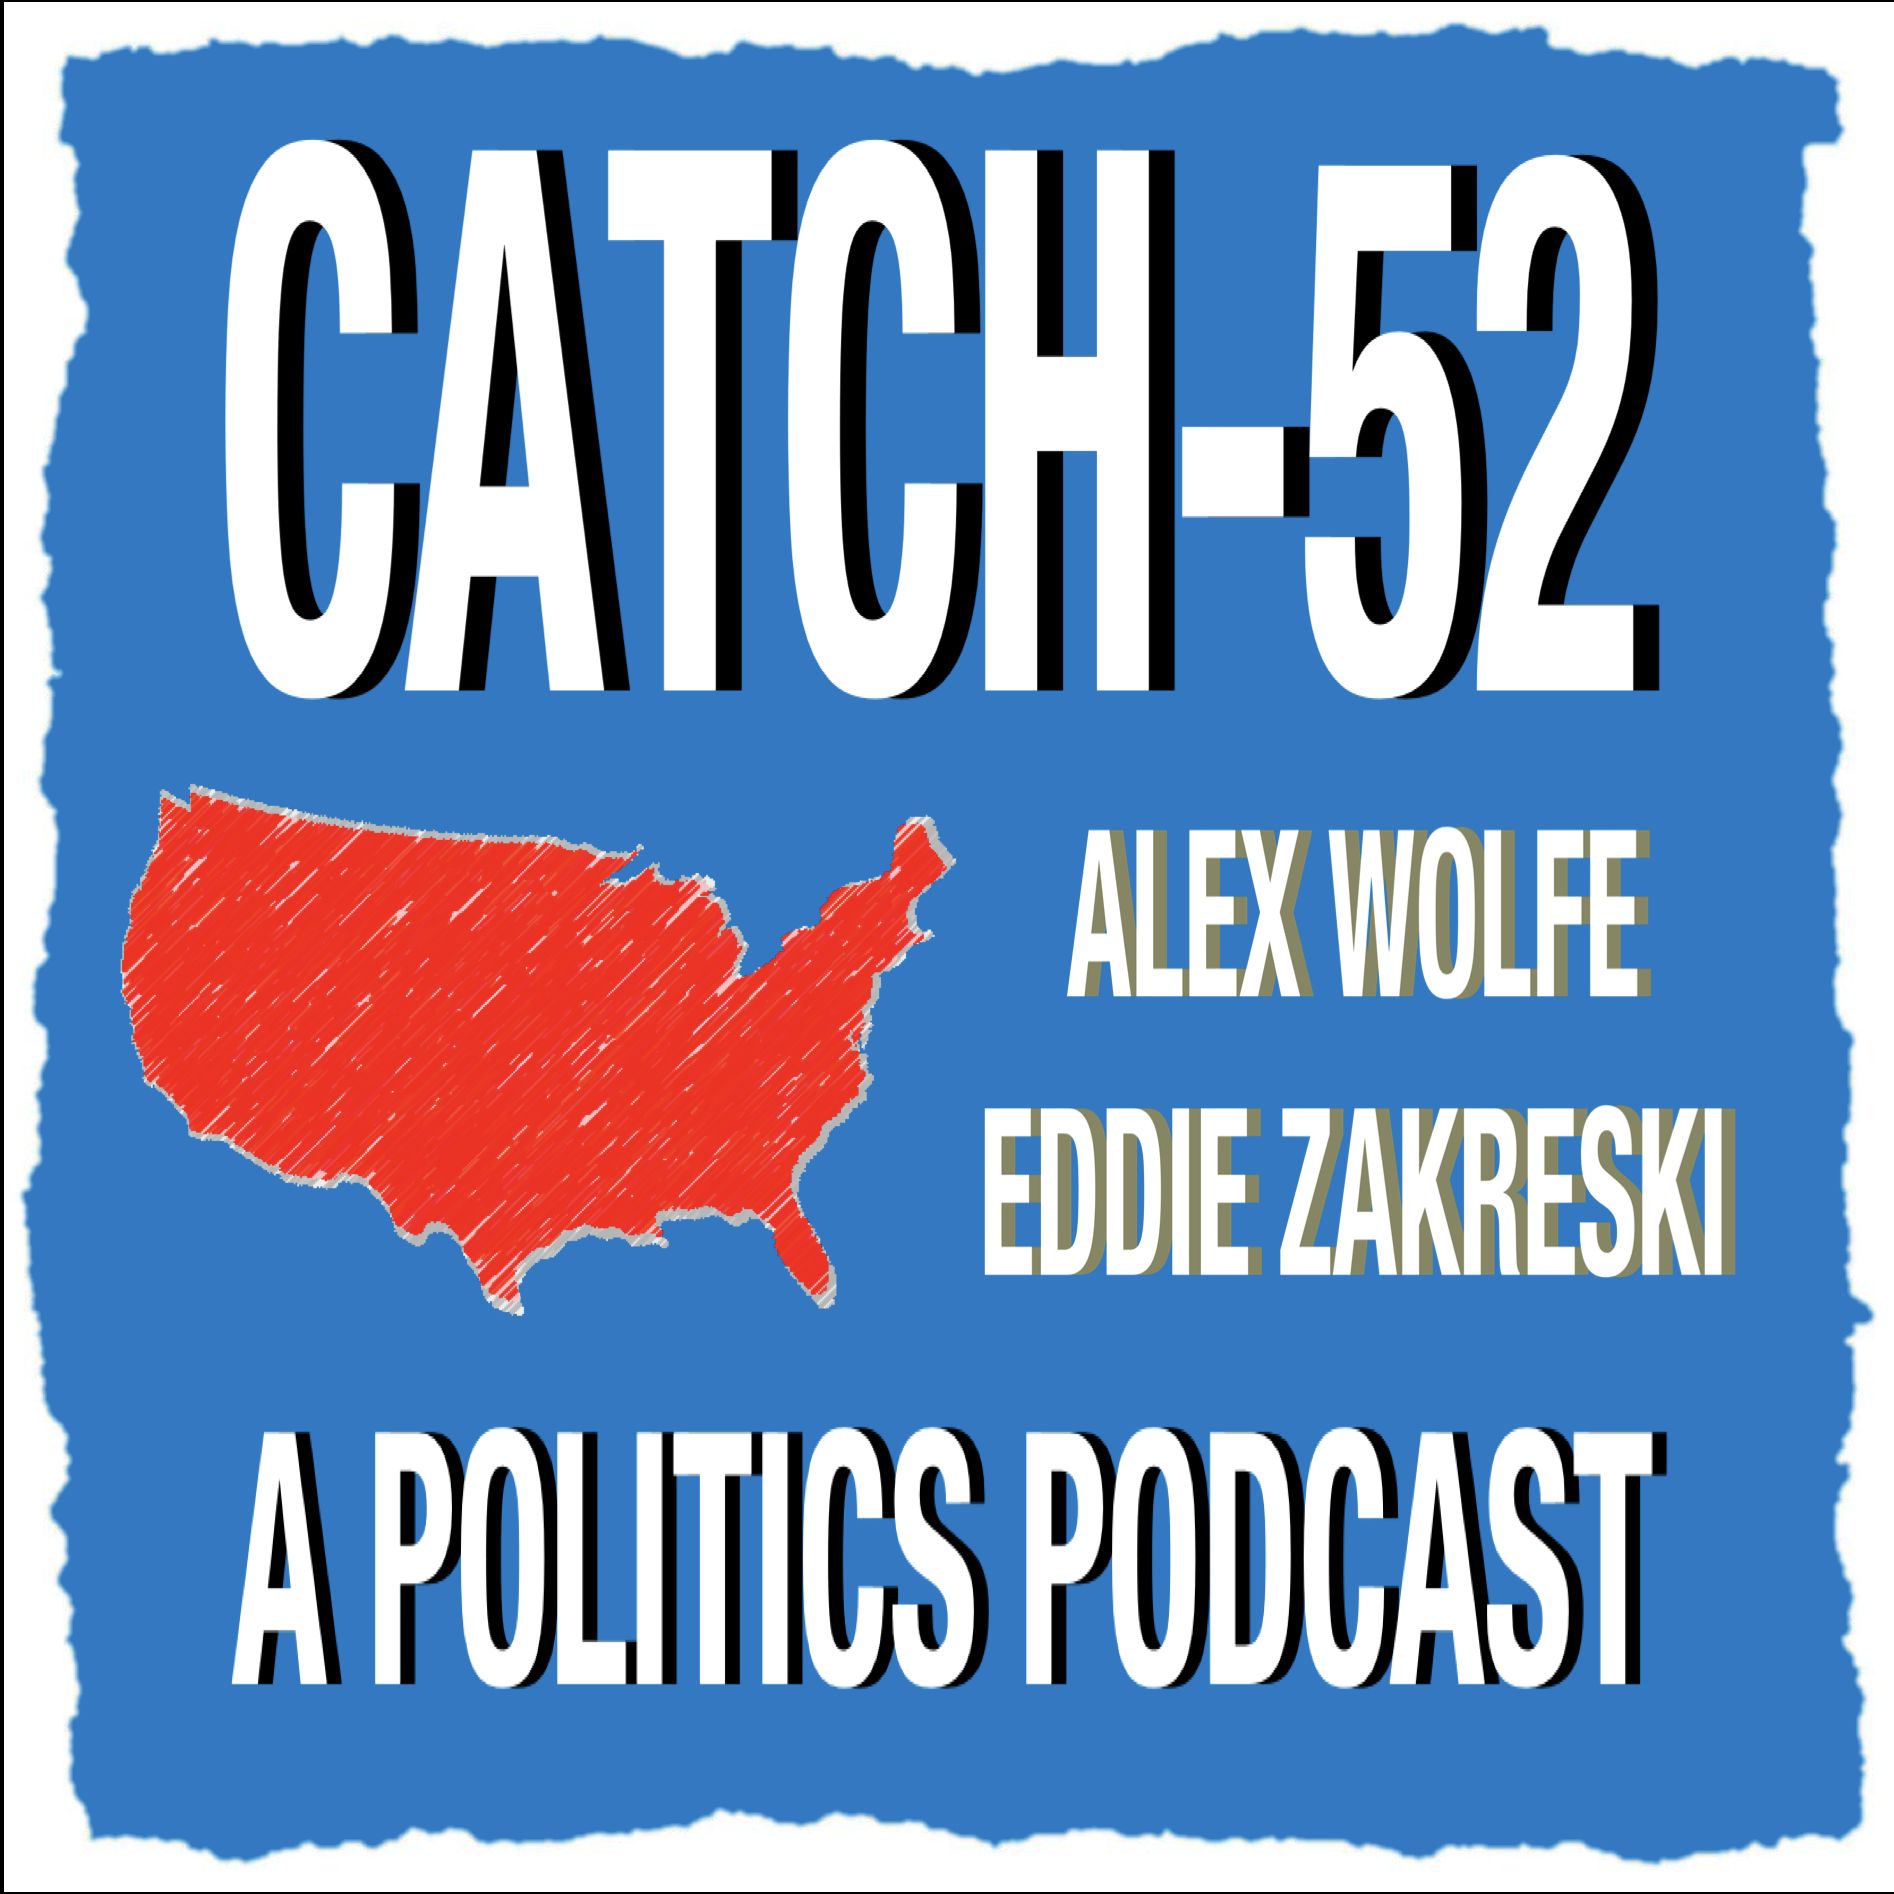 Catch-52: A Politics Podcast